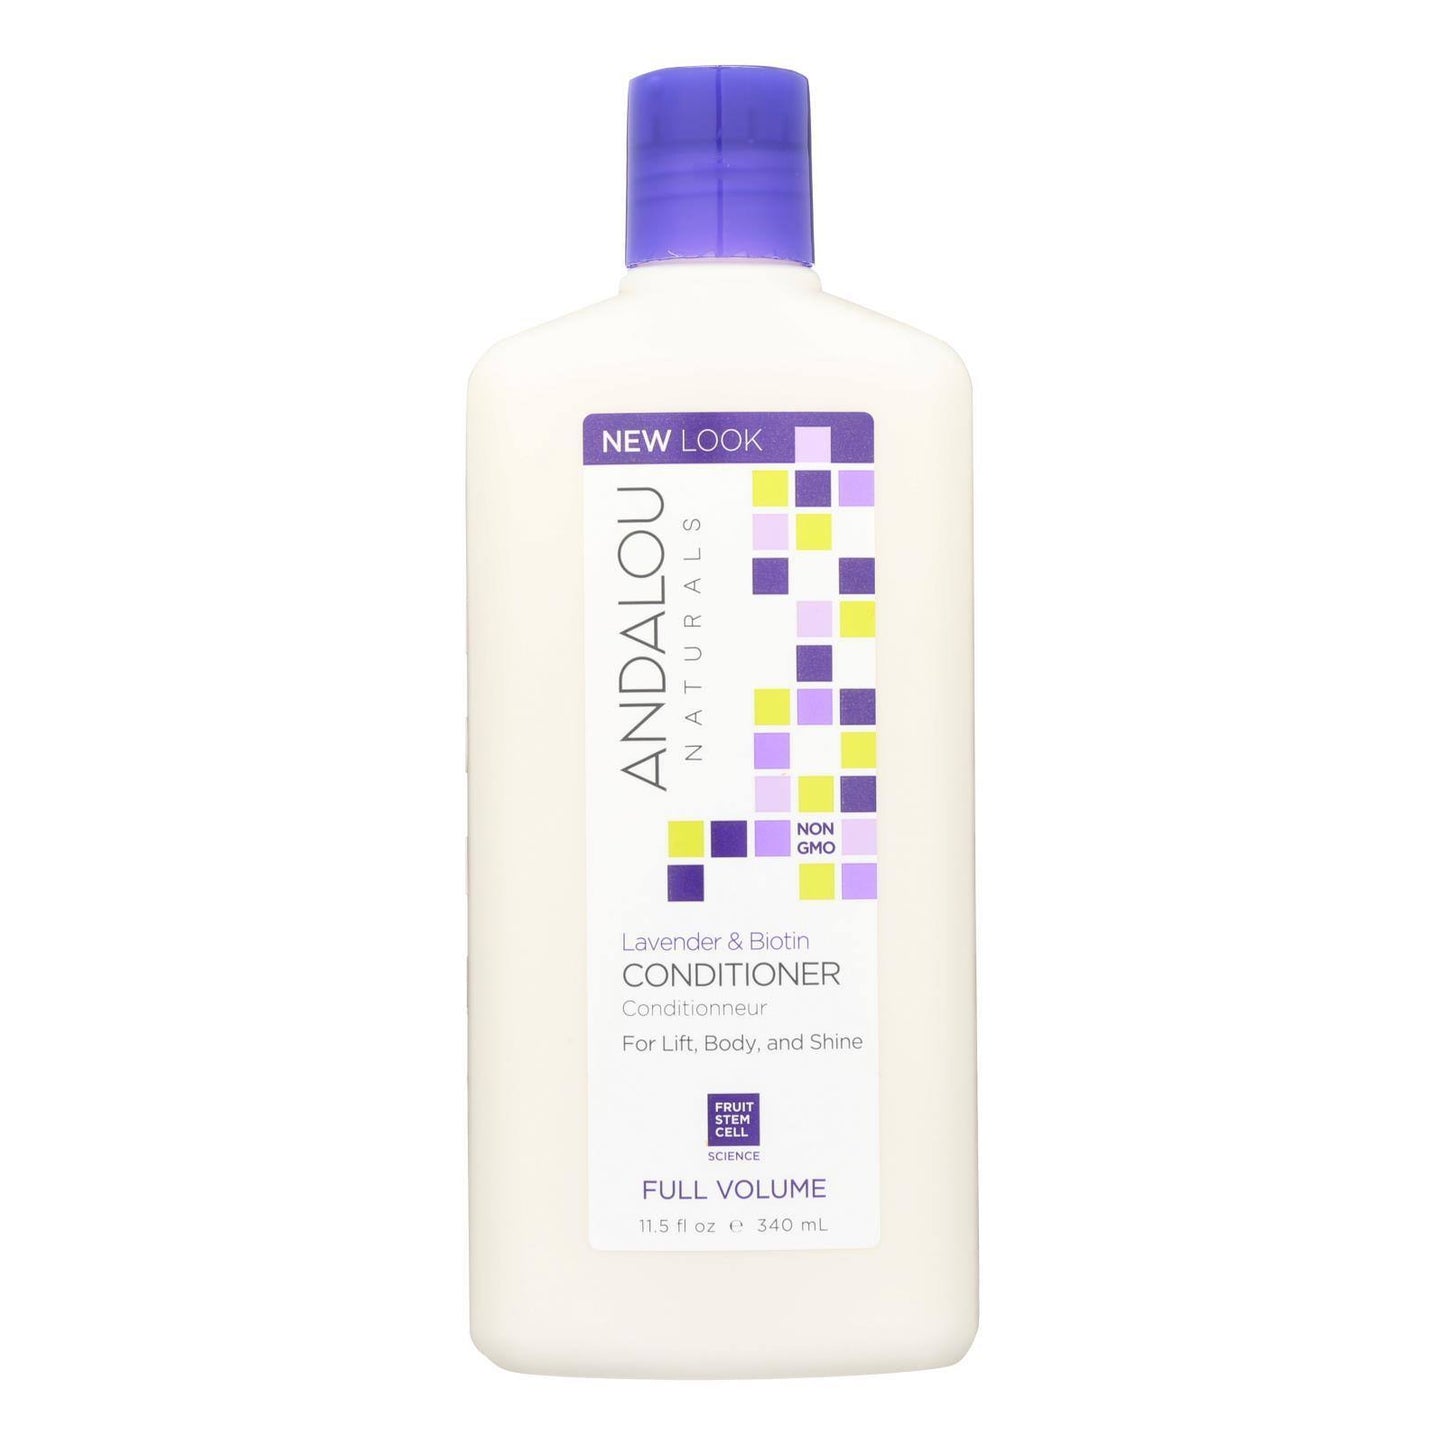 Andalou Naturals Full Volume Conditioner Lavender and Biotin - 11.5 fl oz